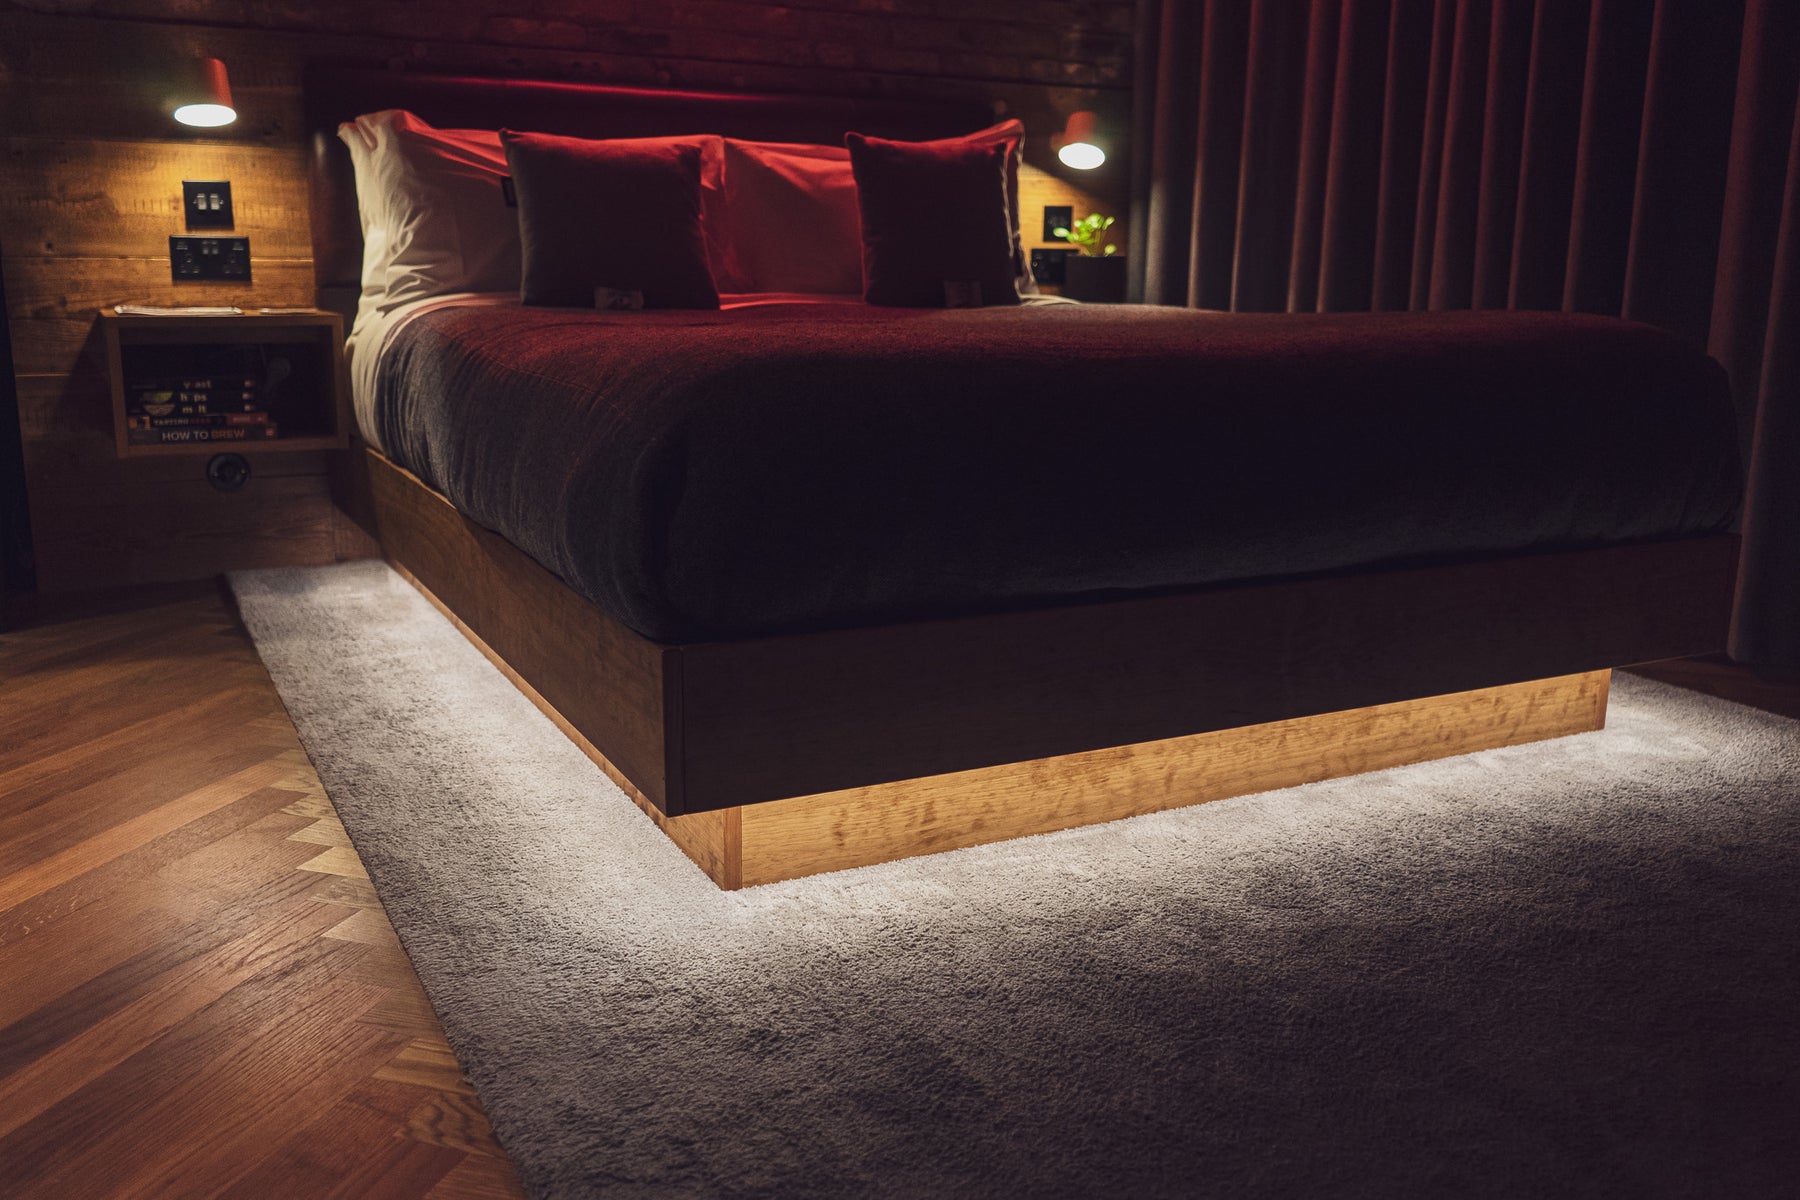 Motion sensors used to automate bedroom lighting